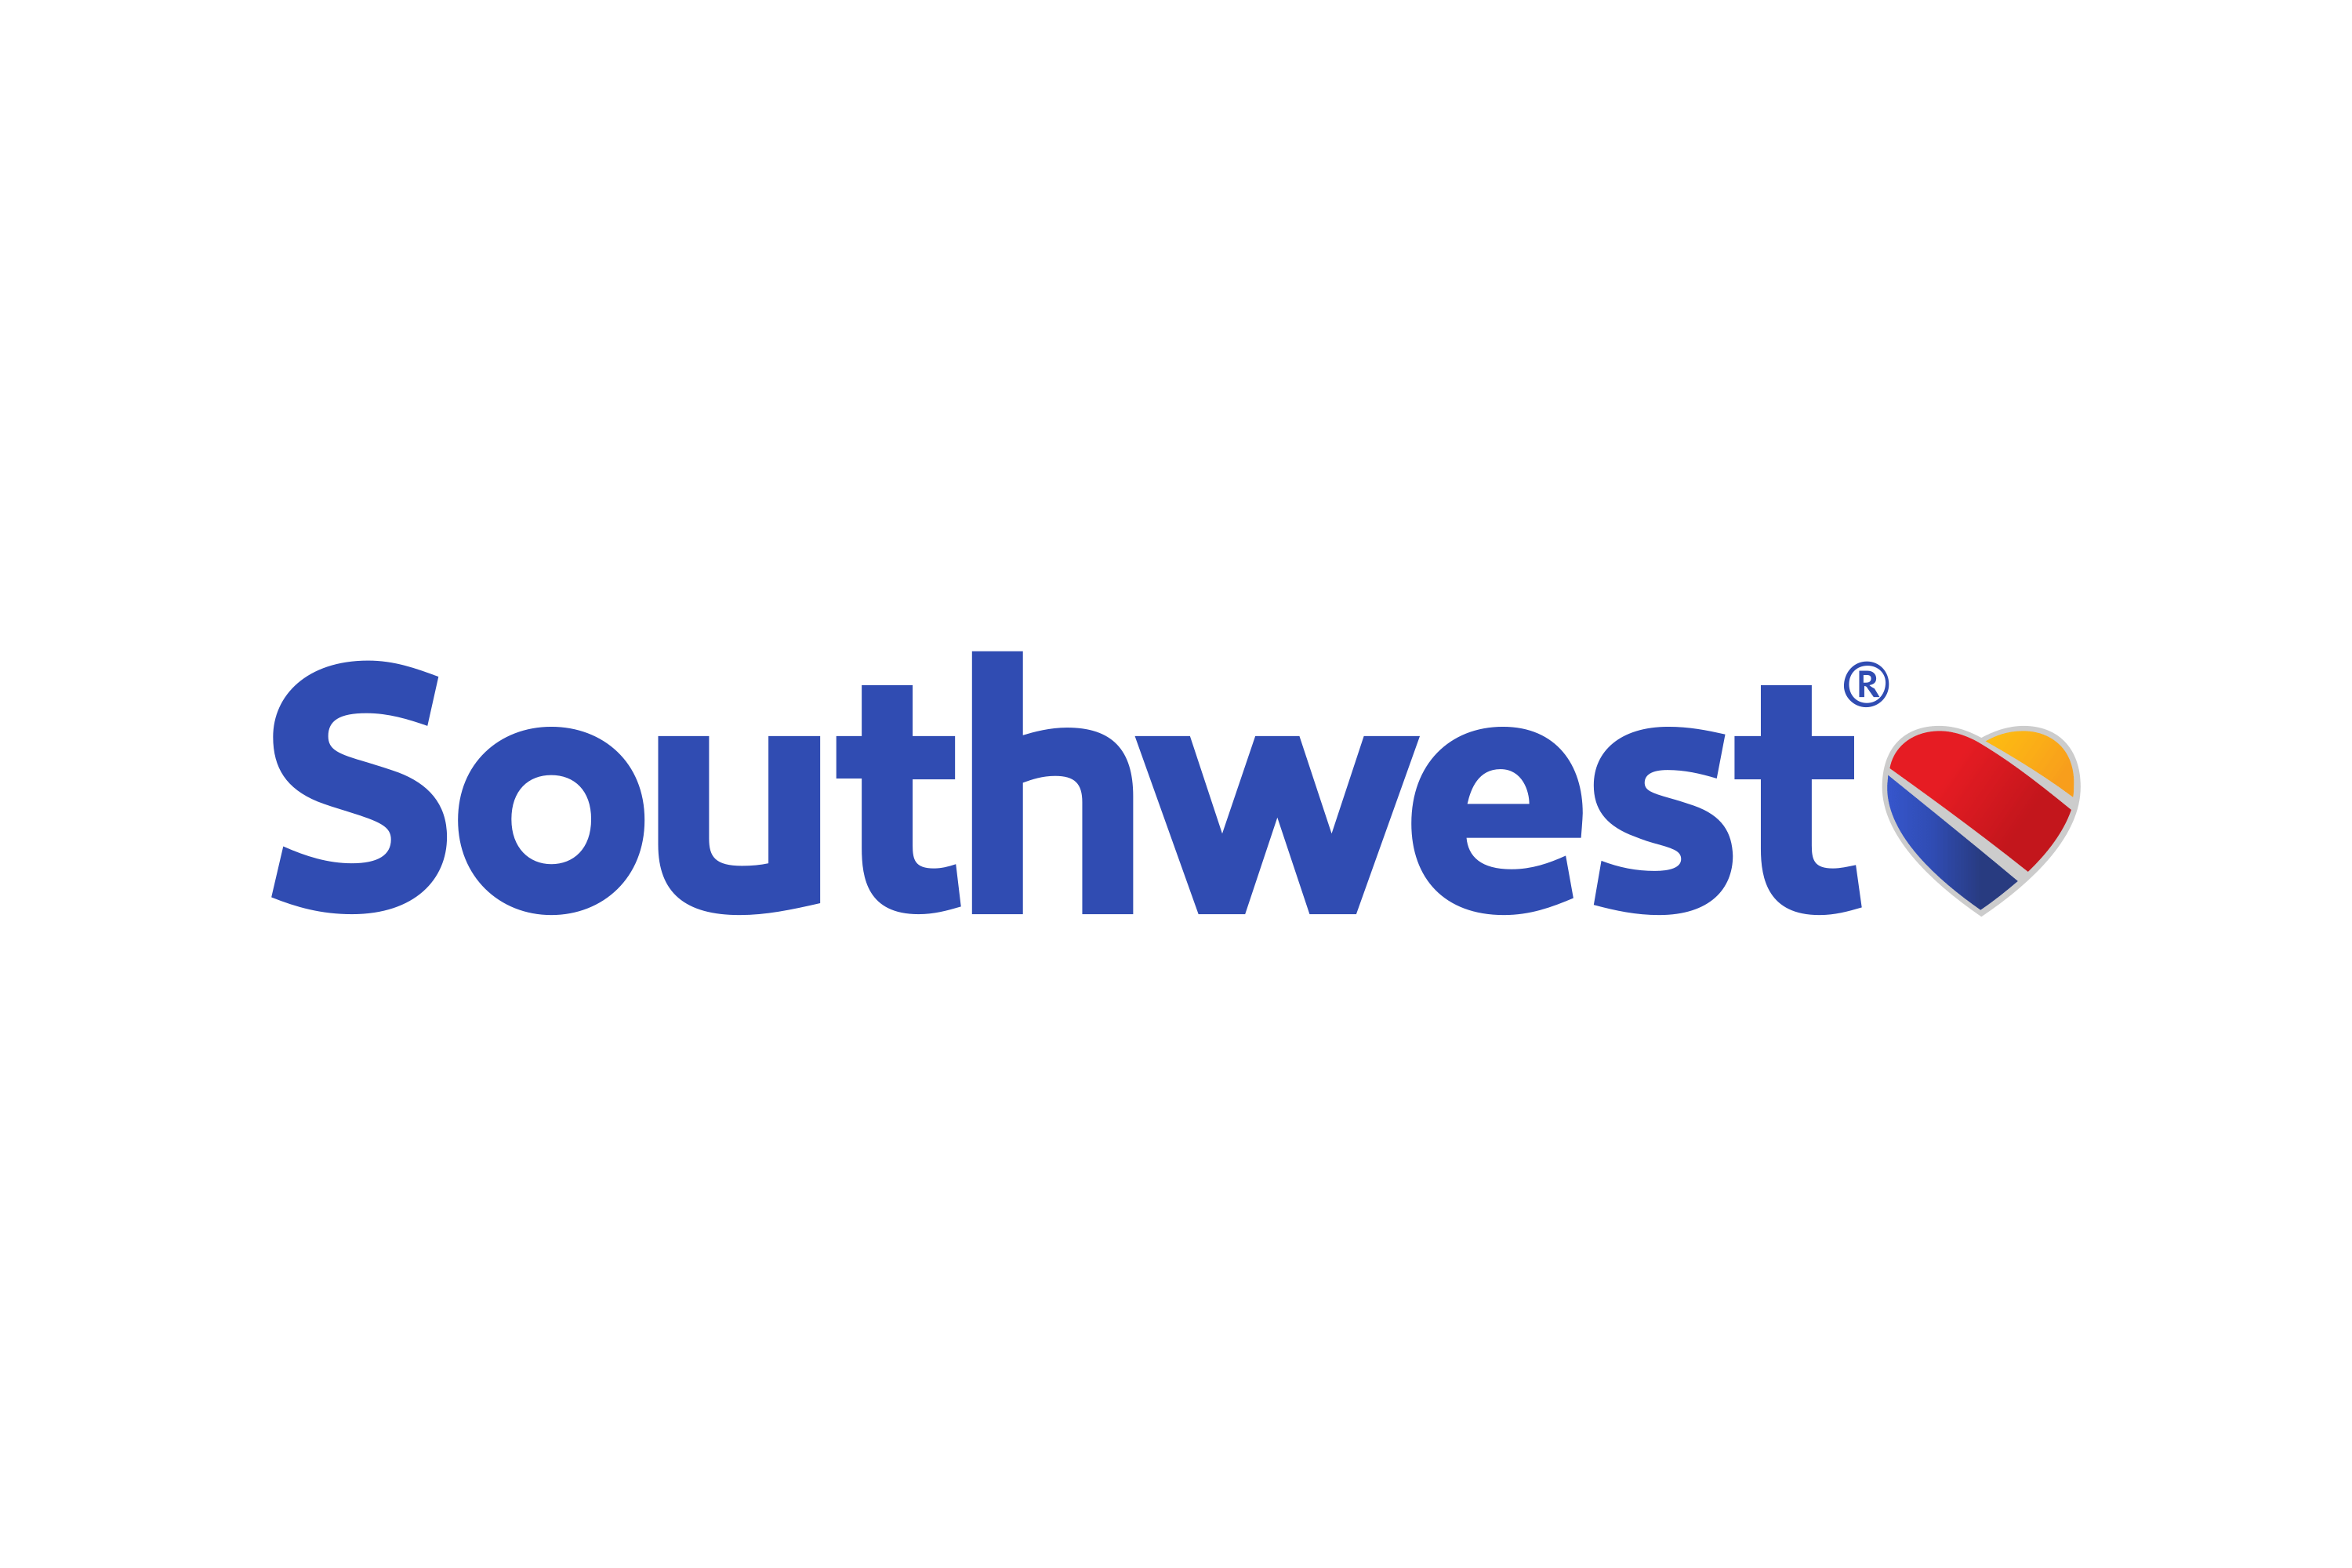 Download Southwest Airlines Logo in SVG Vector or PNG File Format